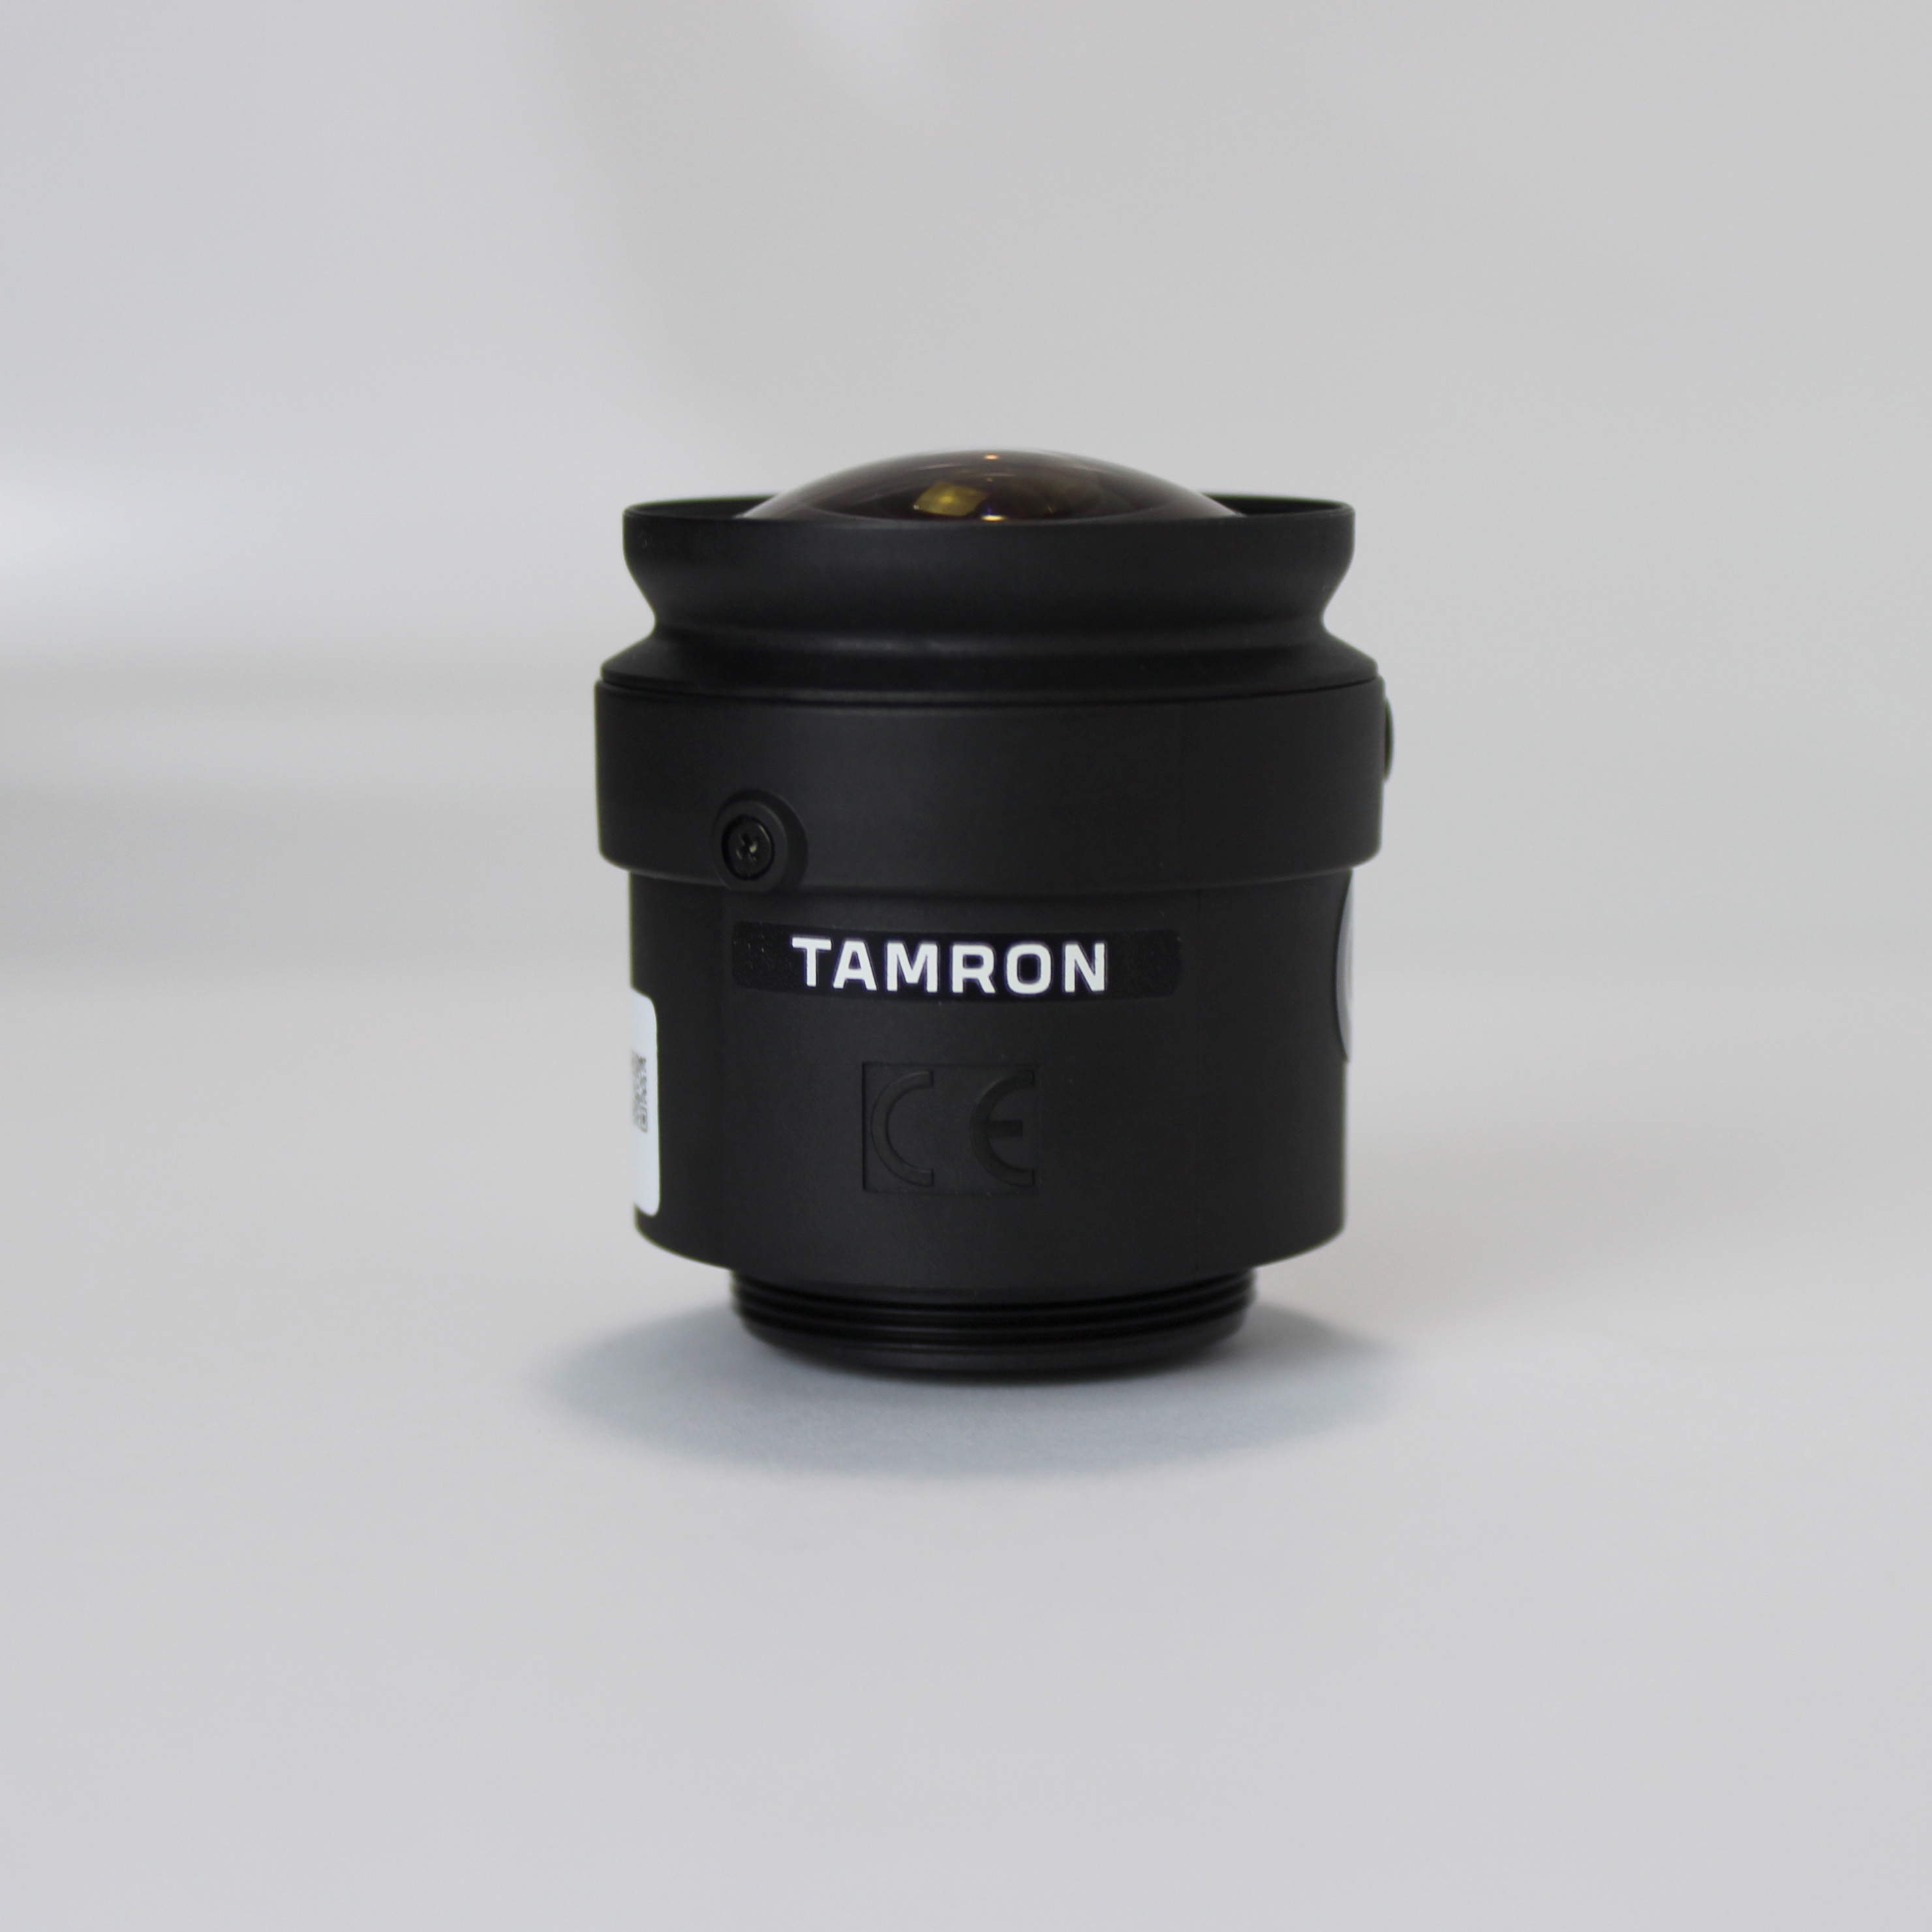 How to choose a suitable tamron cctv lens spec?